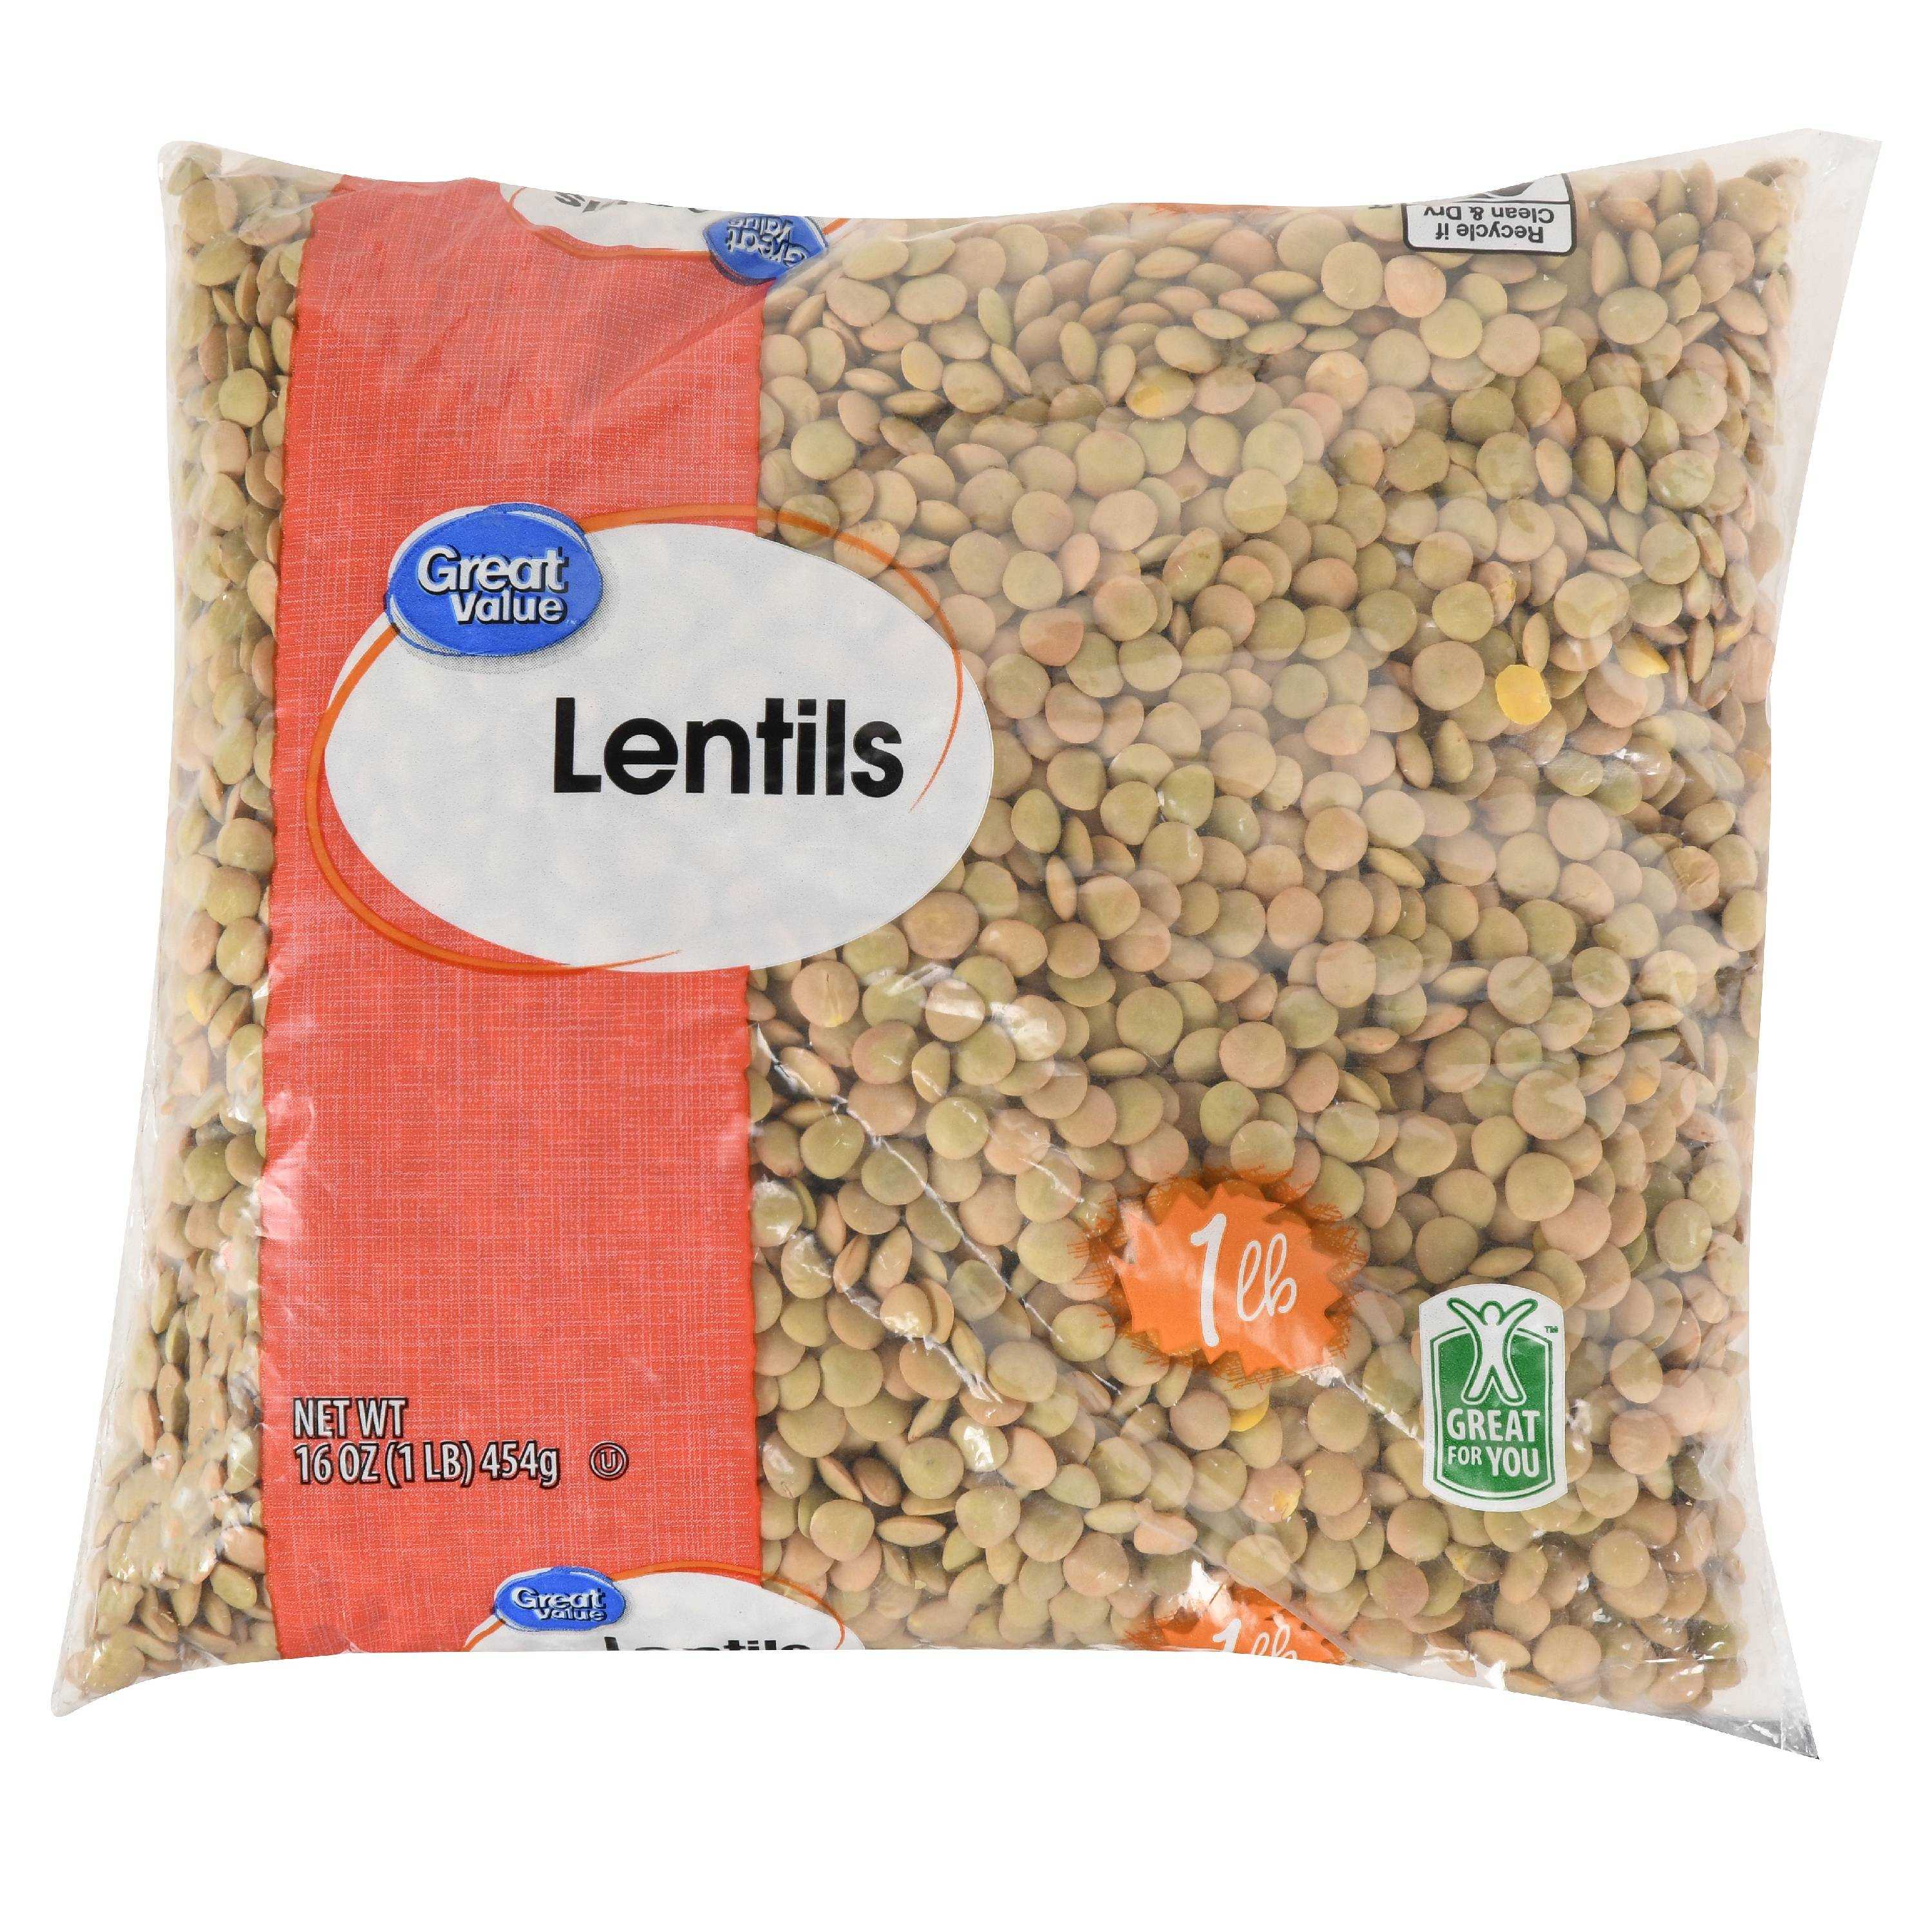 Great Value Lentils, 16 oz